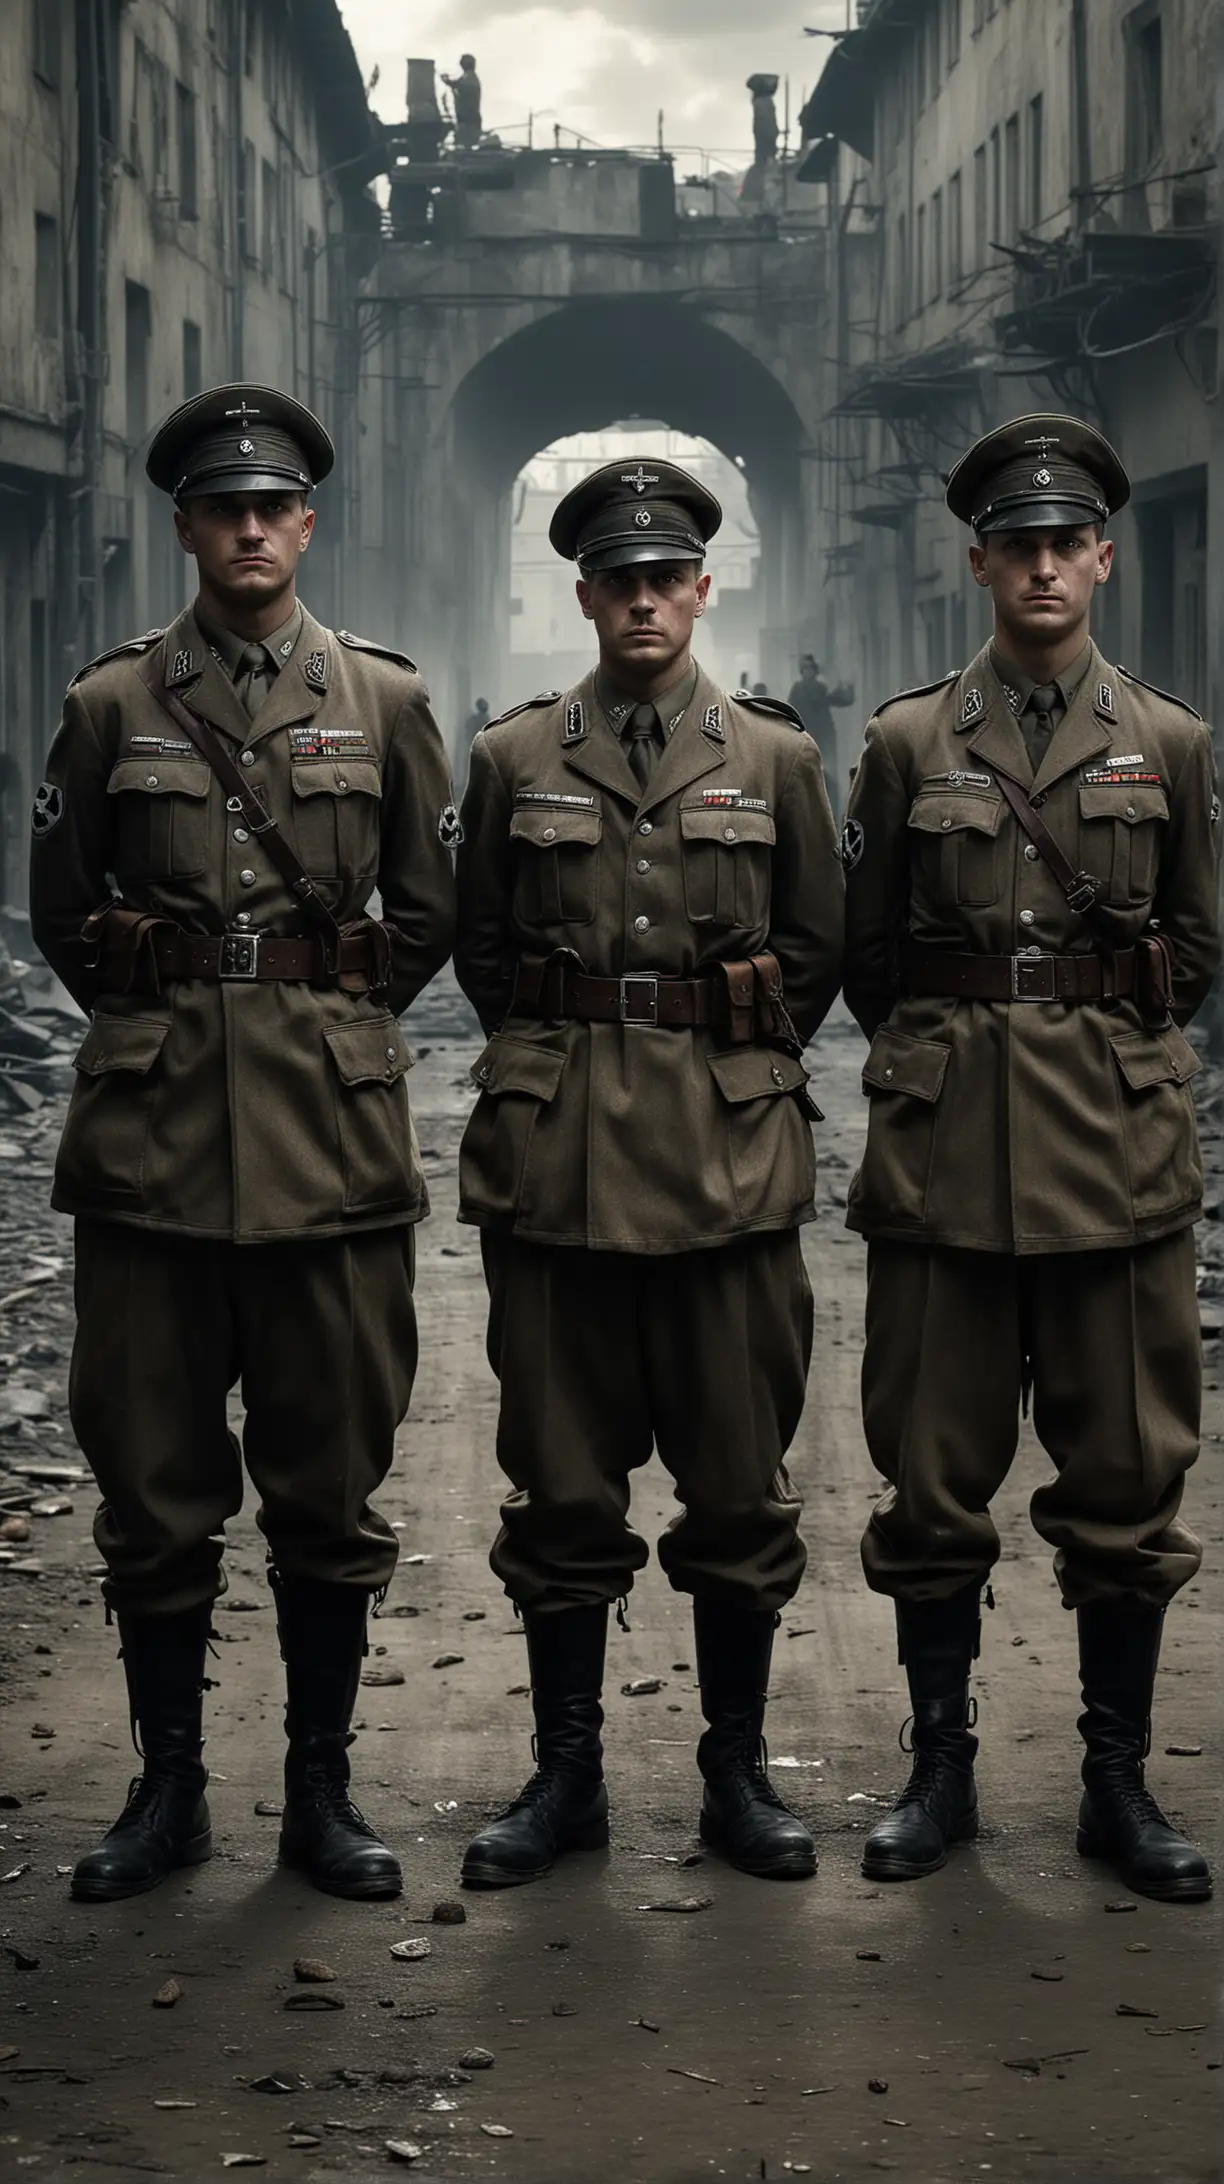 Menacing Nazi German Soldiers in World War II Military Uniforms